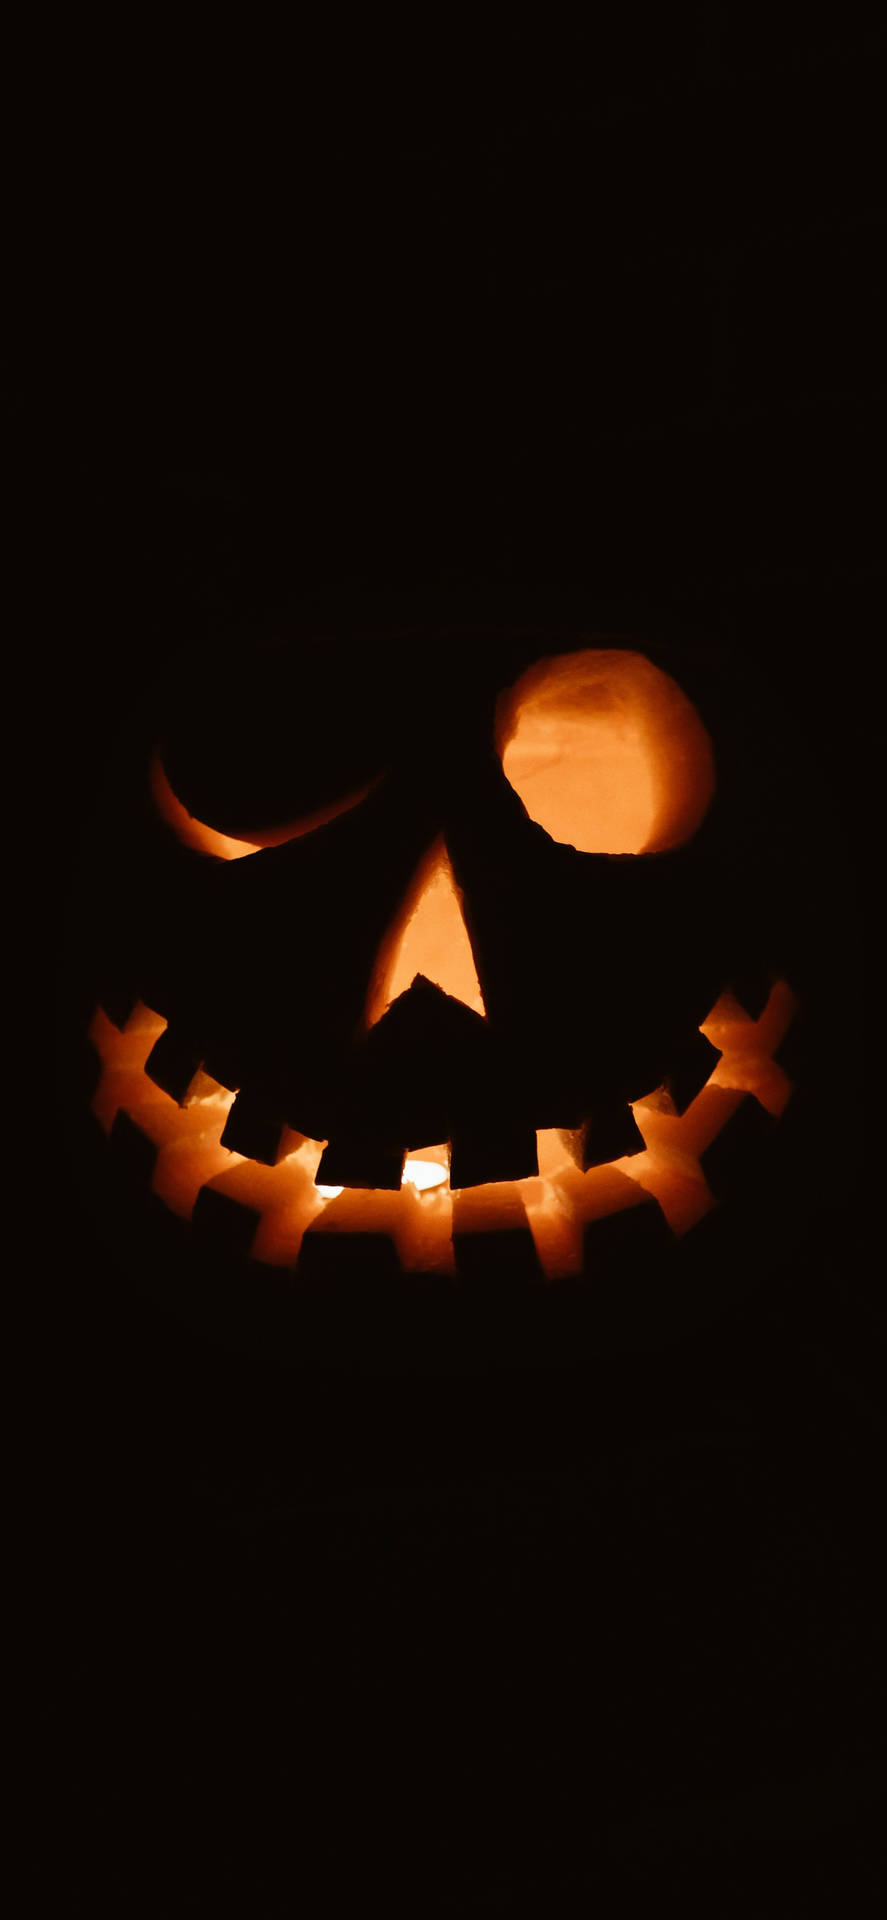 Jack-o-lantern Face Halloween Iphone Wallpaper